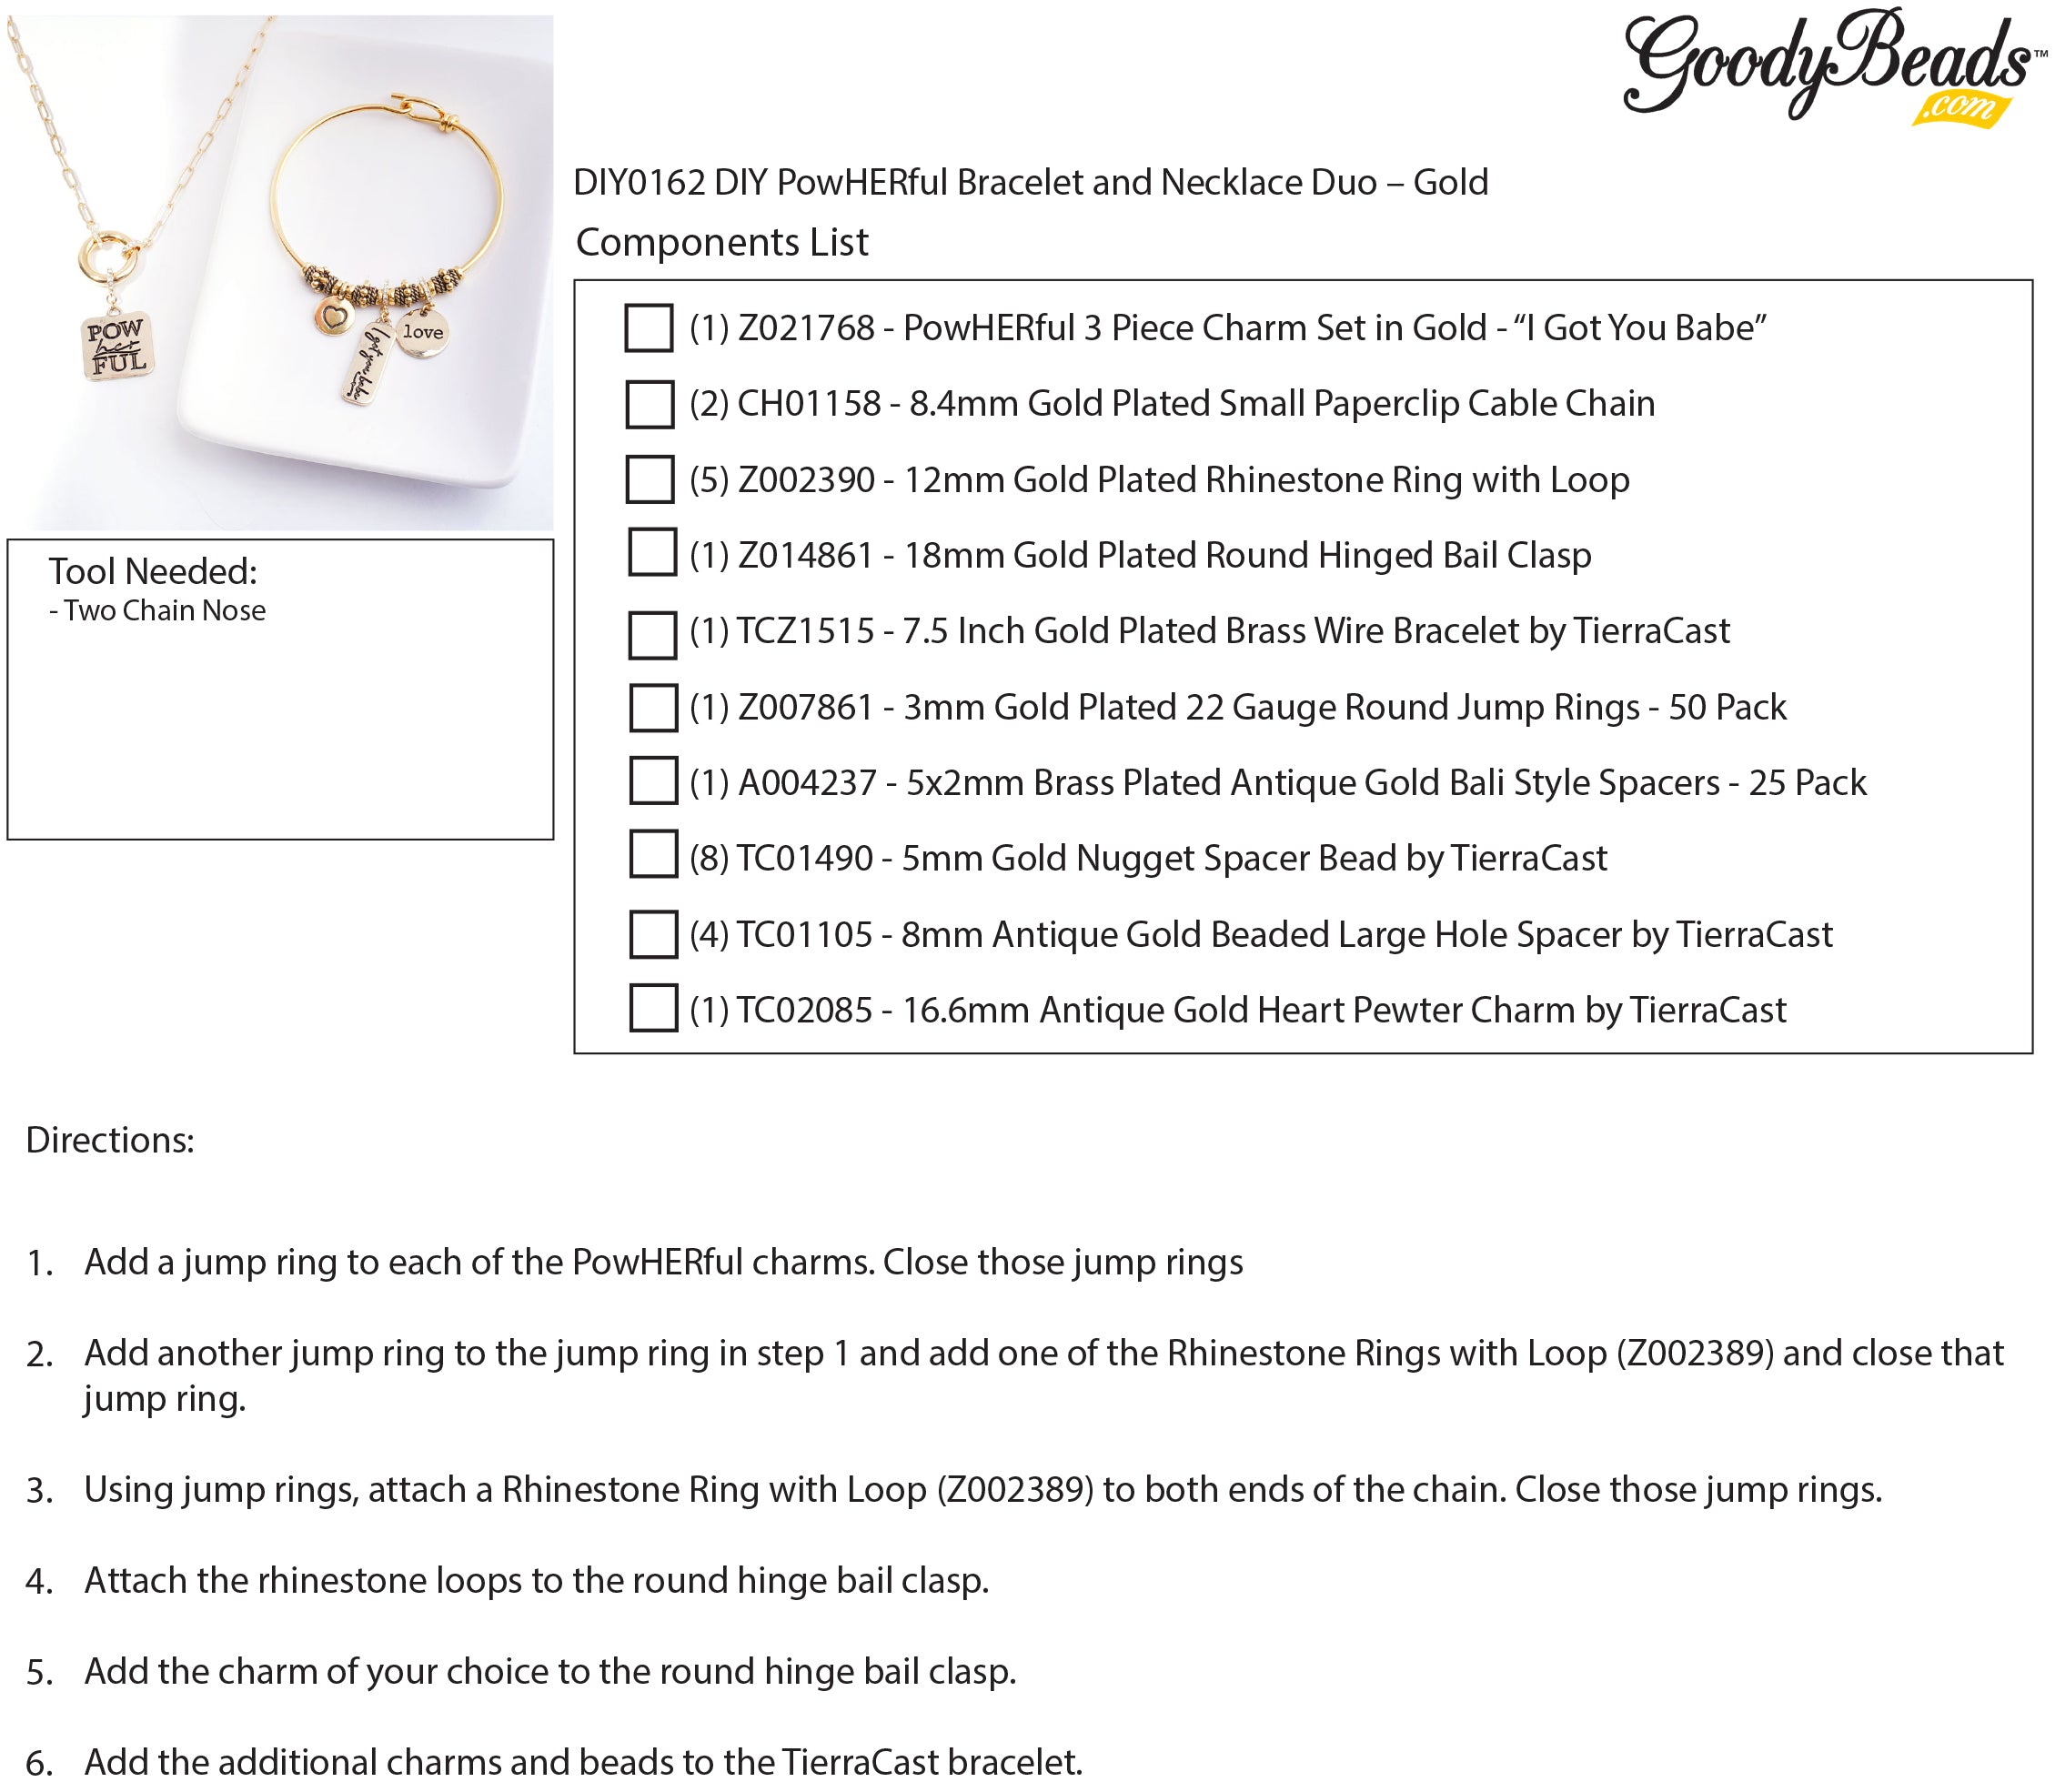 DIY PowHERful Bracelet and Necklace Duo - Gold - Goody Beads